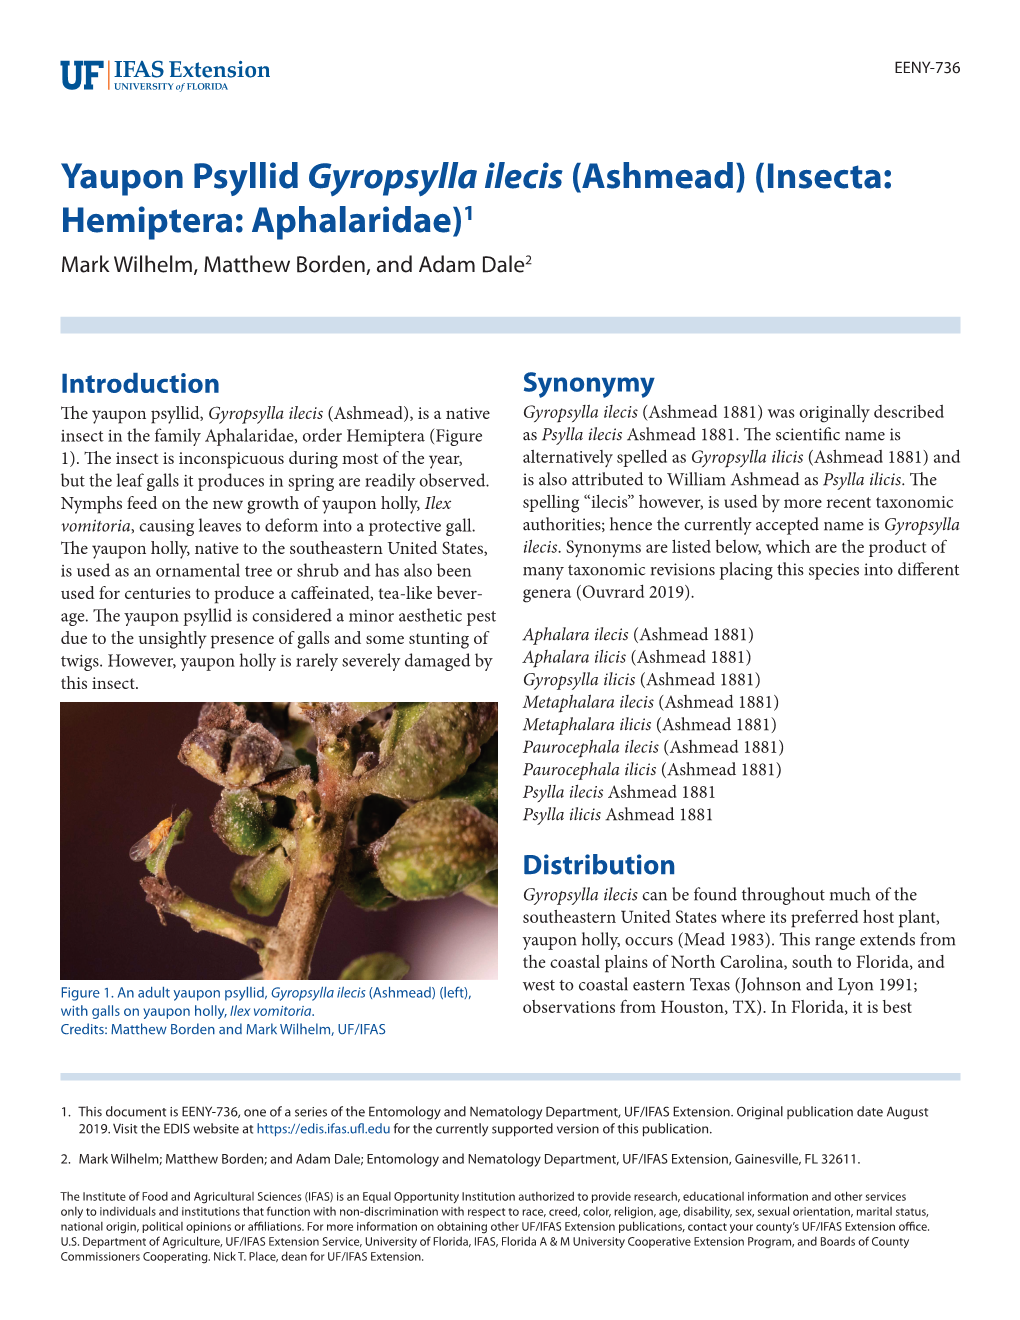 Yaupon Psyllid Gyropsylla Ilecis (Ashmead) (Insecta: Hemiptera: Aphalaridae)1 Mark Wilhelm, Matthew Borden, and Adam Dale2